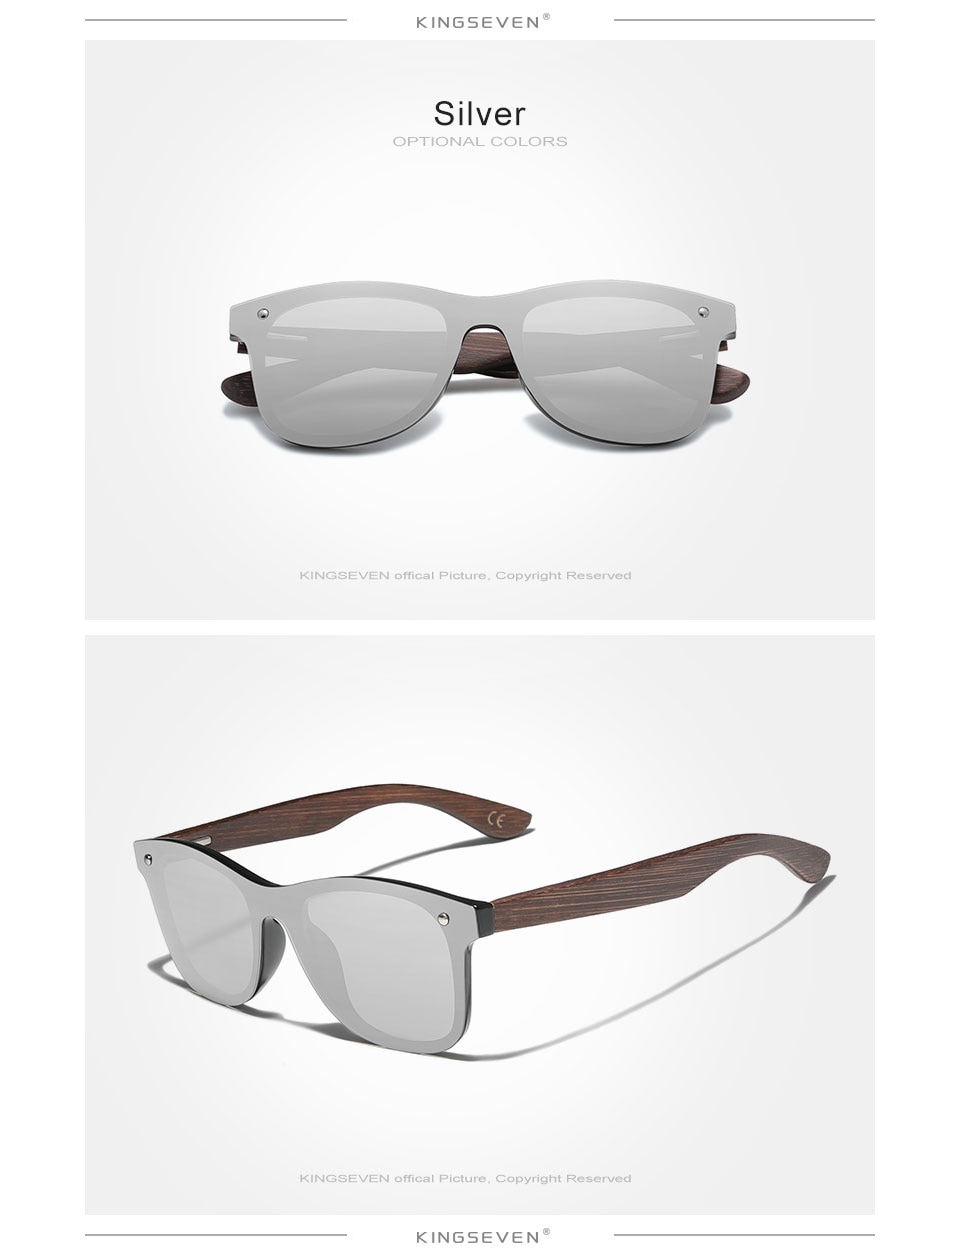 KINGSEVEN New Technology Handmade Blackened Bamboo Sunglasses